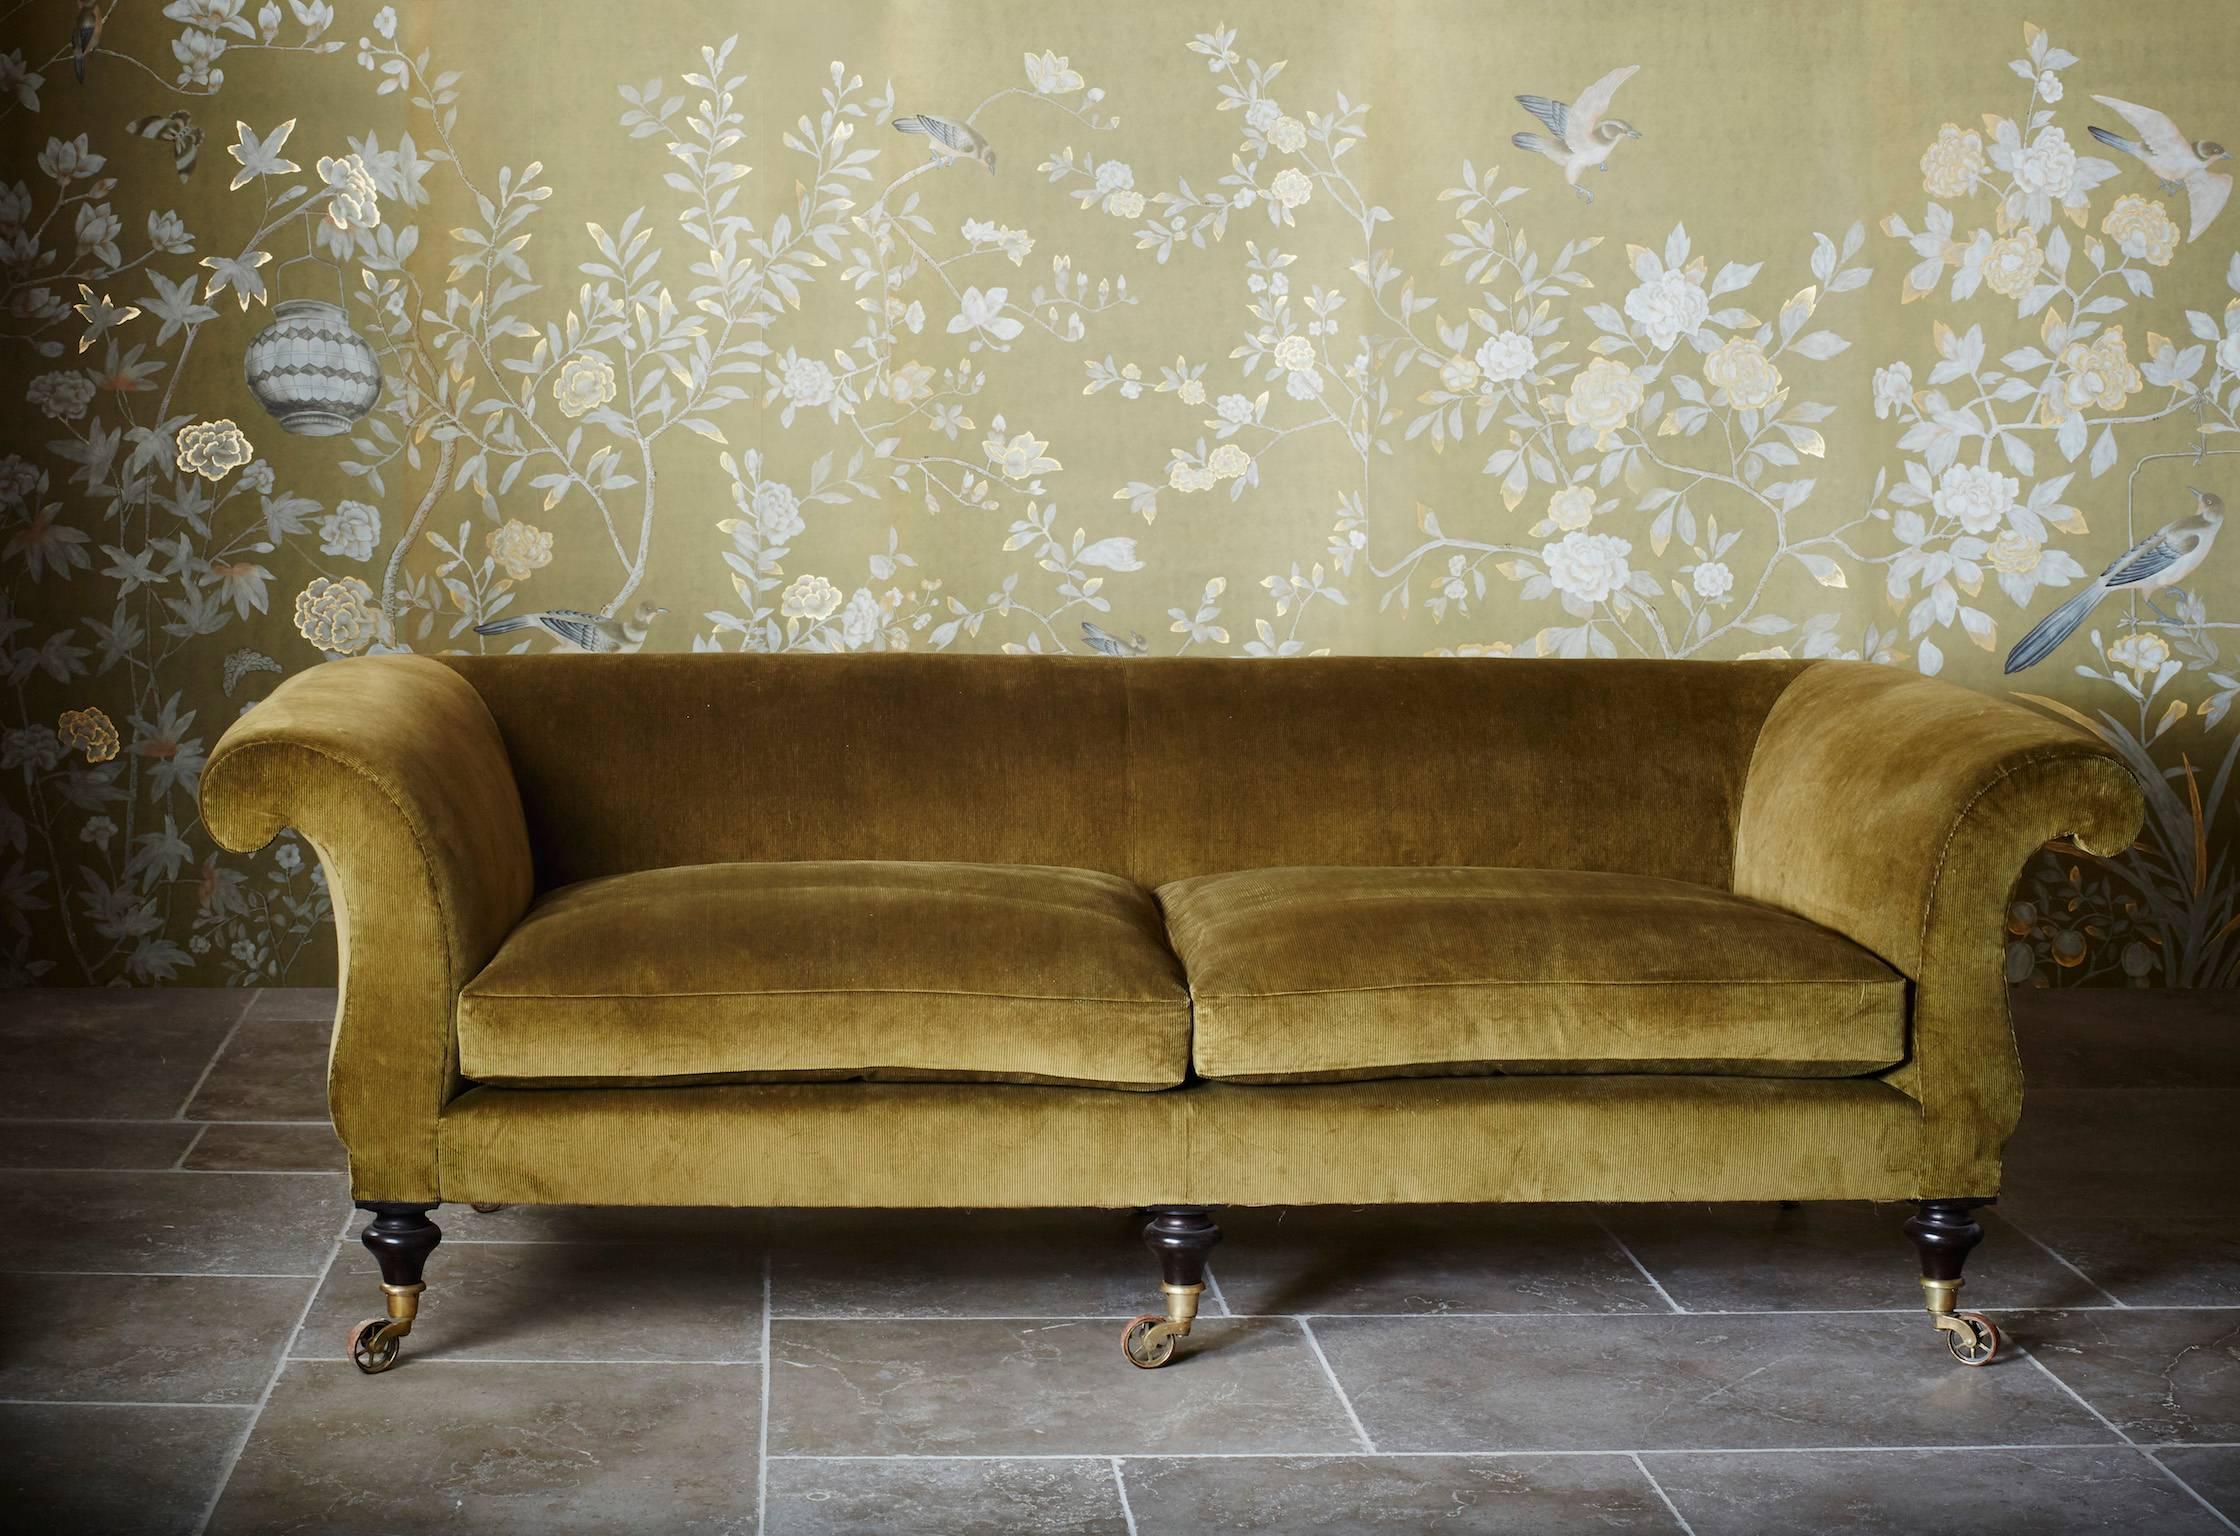 Upholstered 'Kinross' Regency-Inspired Sofa by Ensemblier, Bespoke In Excellent Condition For Sale In London, GB